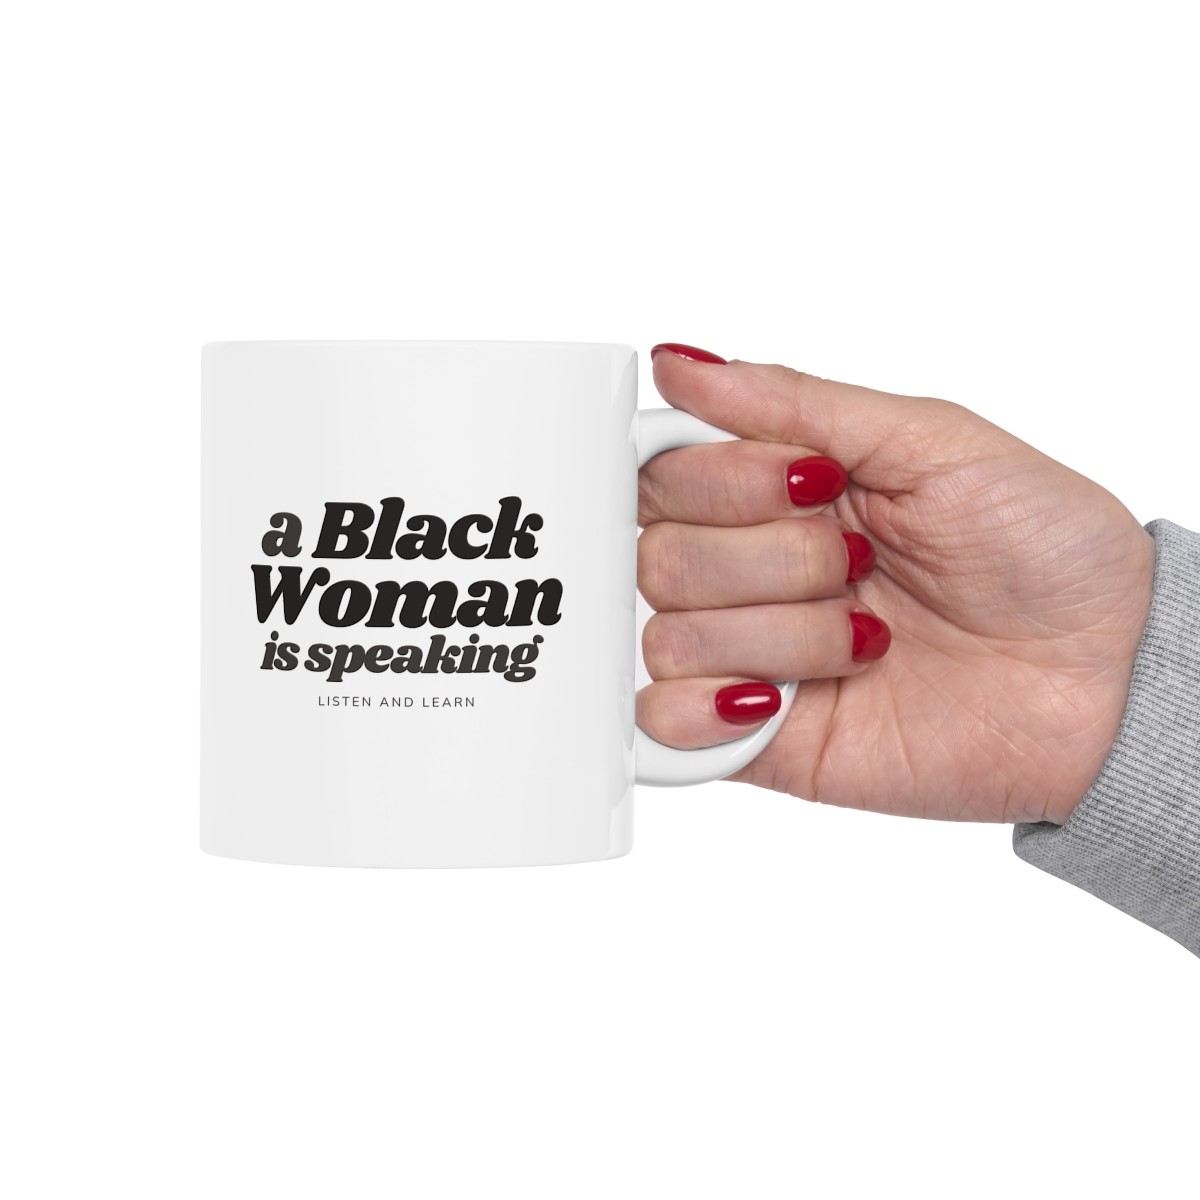 A Black Woman is Speaking Mug product thumbnail image